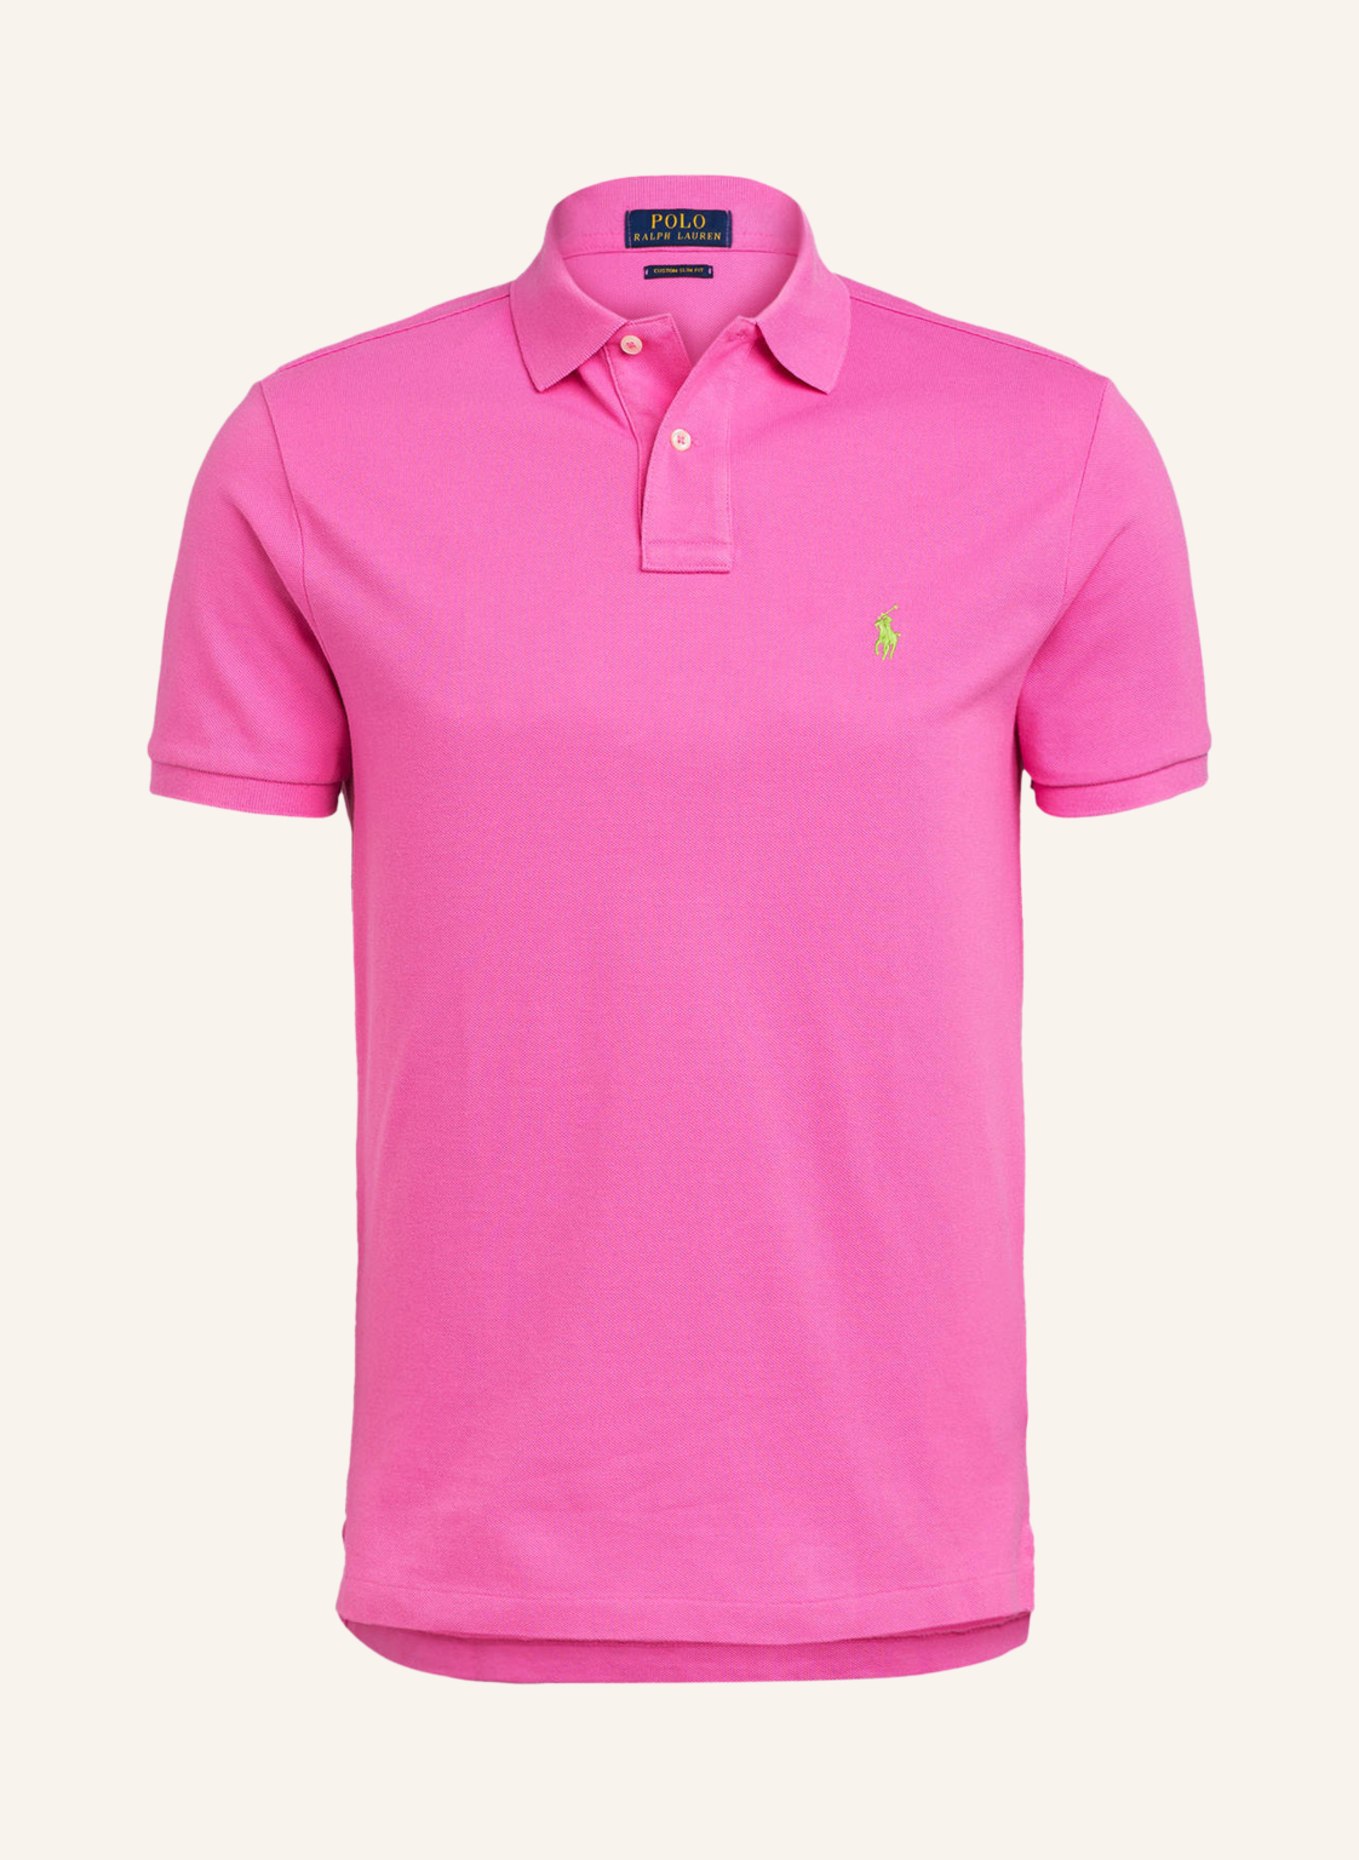 POLO RALPH LAUREN Piqué-Poloshirt Custom Slim Fit , Farbe: MAUI PINK (Bild 1)